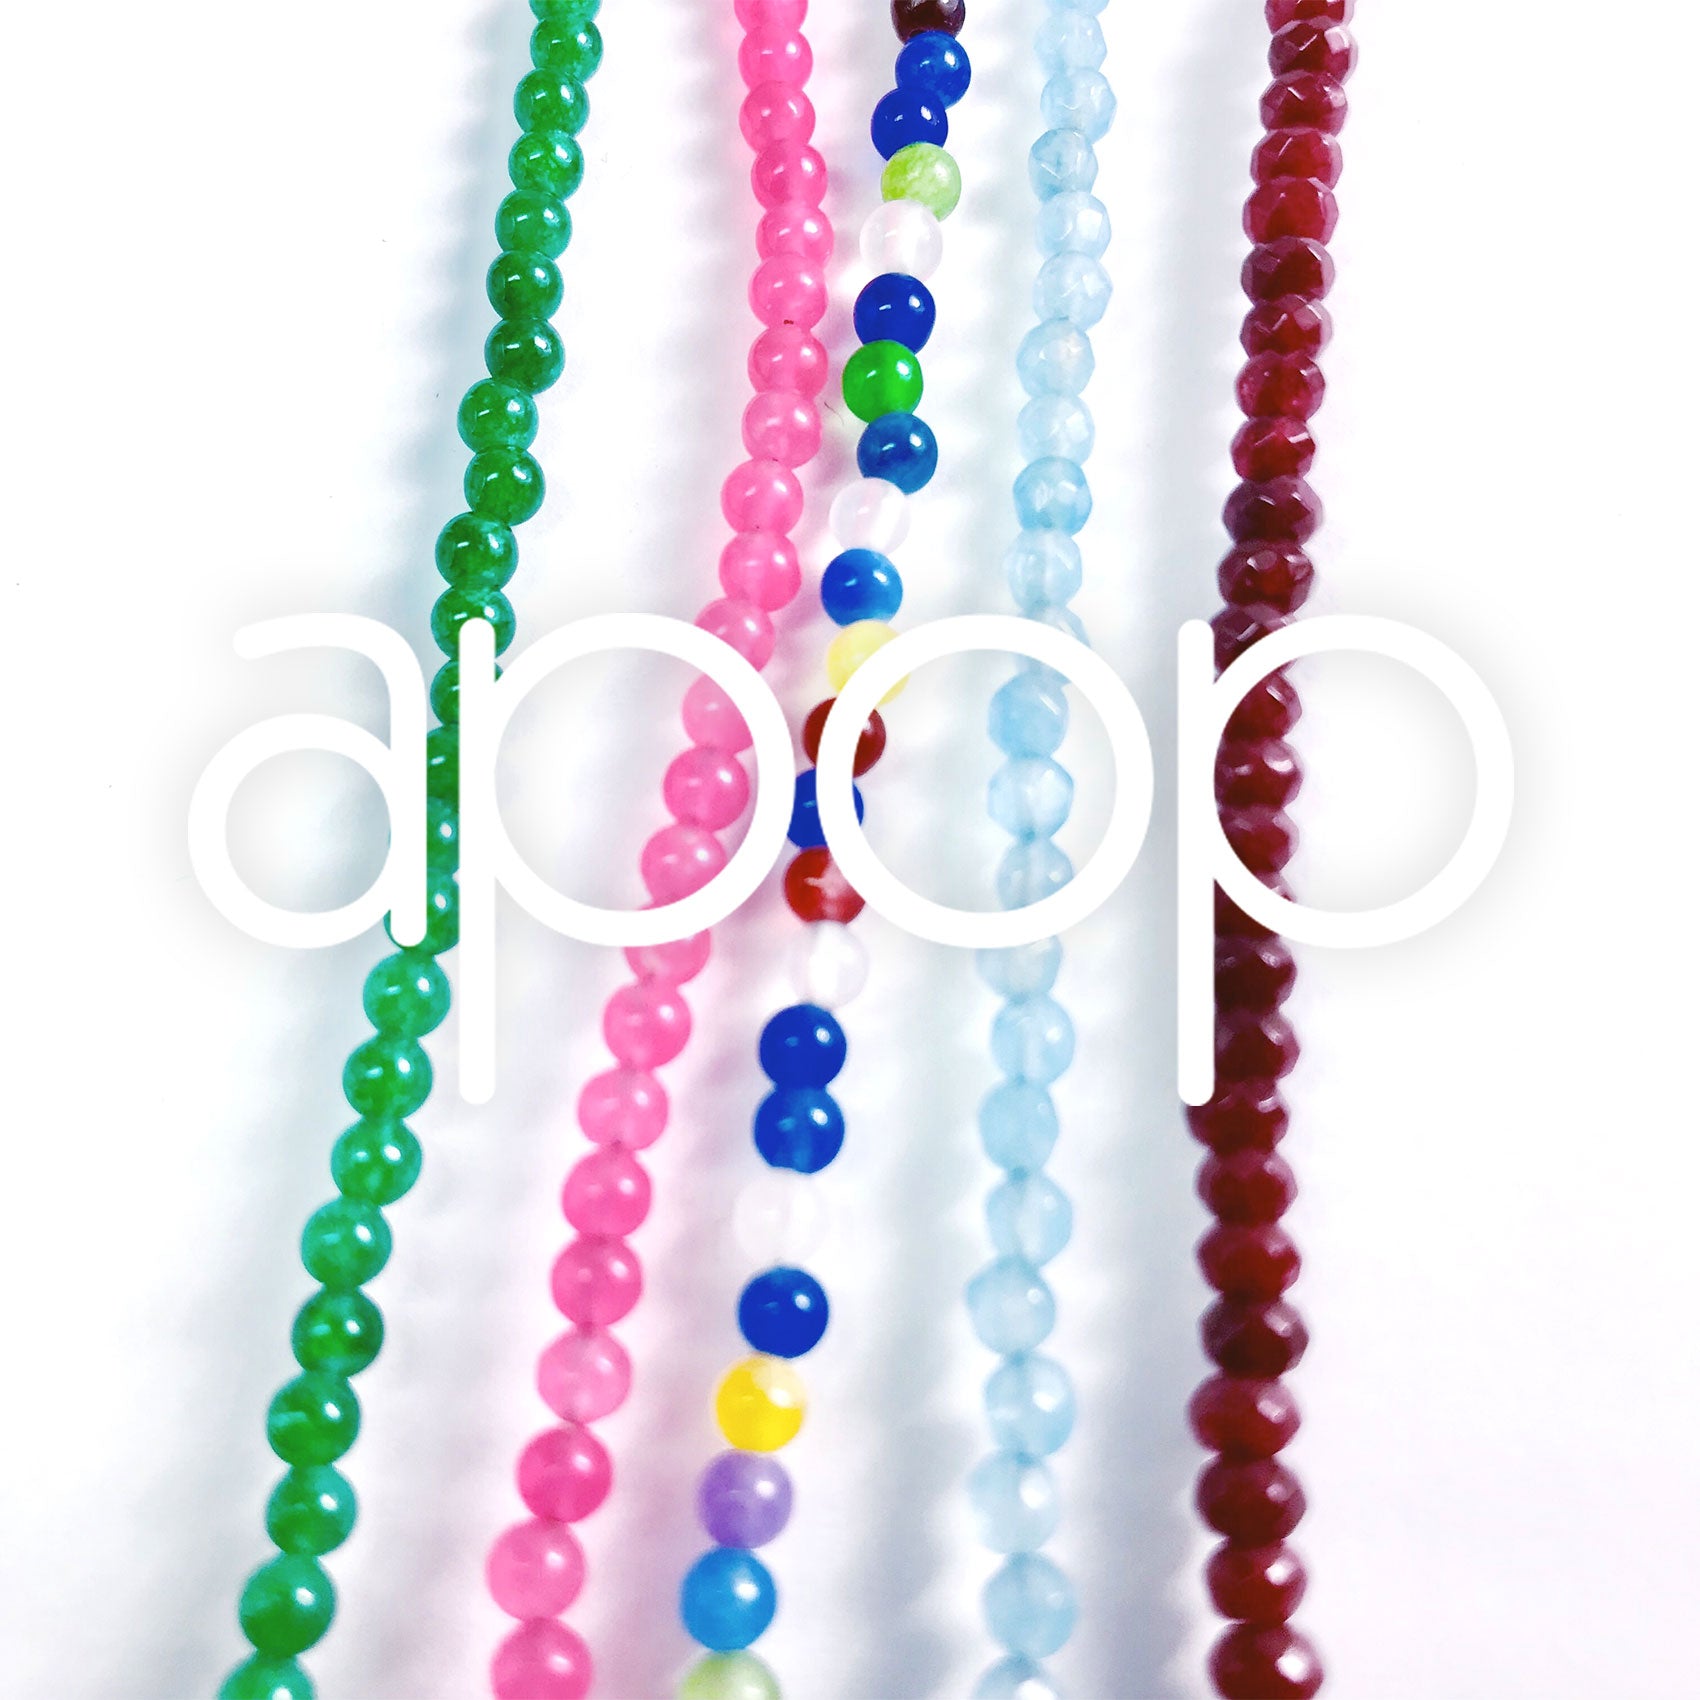 MultiColor Rainbow Stone Beaded Necklace